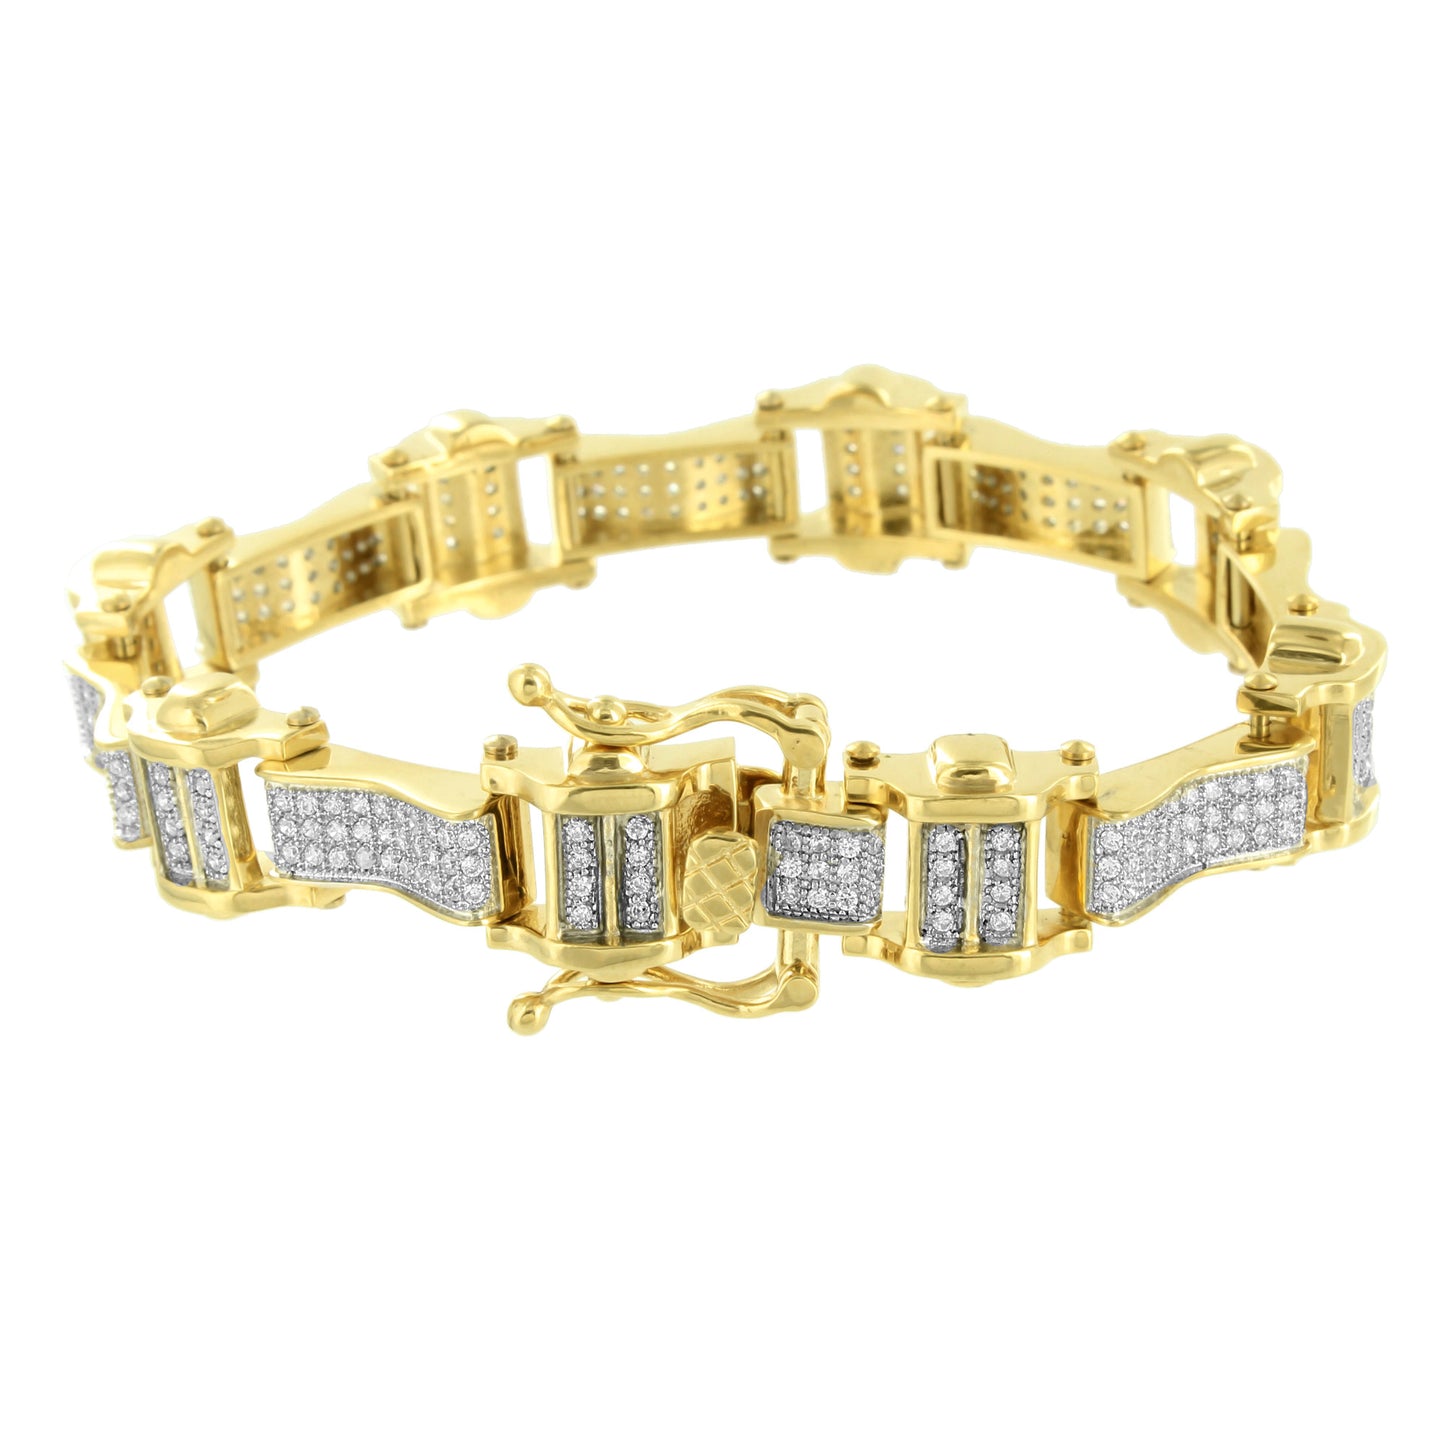 Stainless Steel Bracelet For Men On Sale Lab Diamonds 14k Yellow Gold Finish New